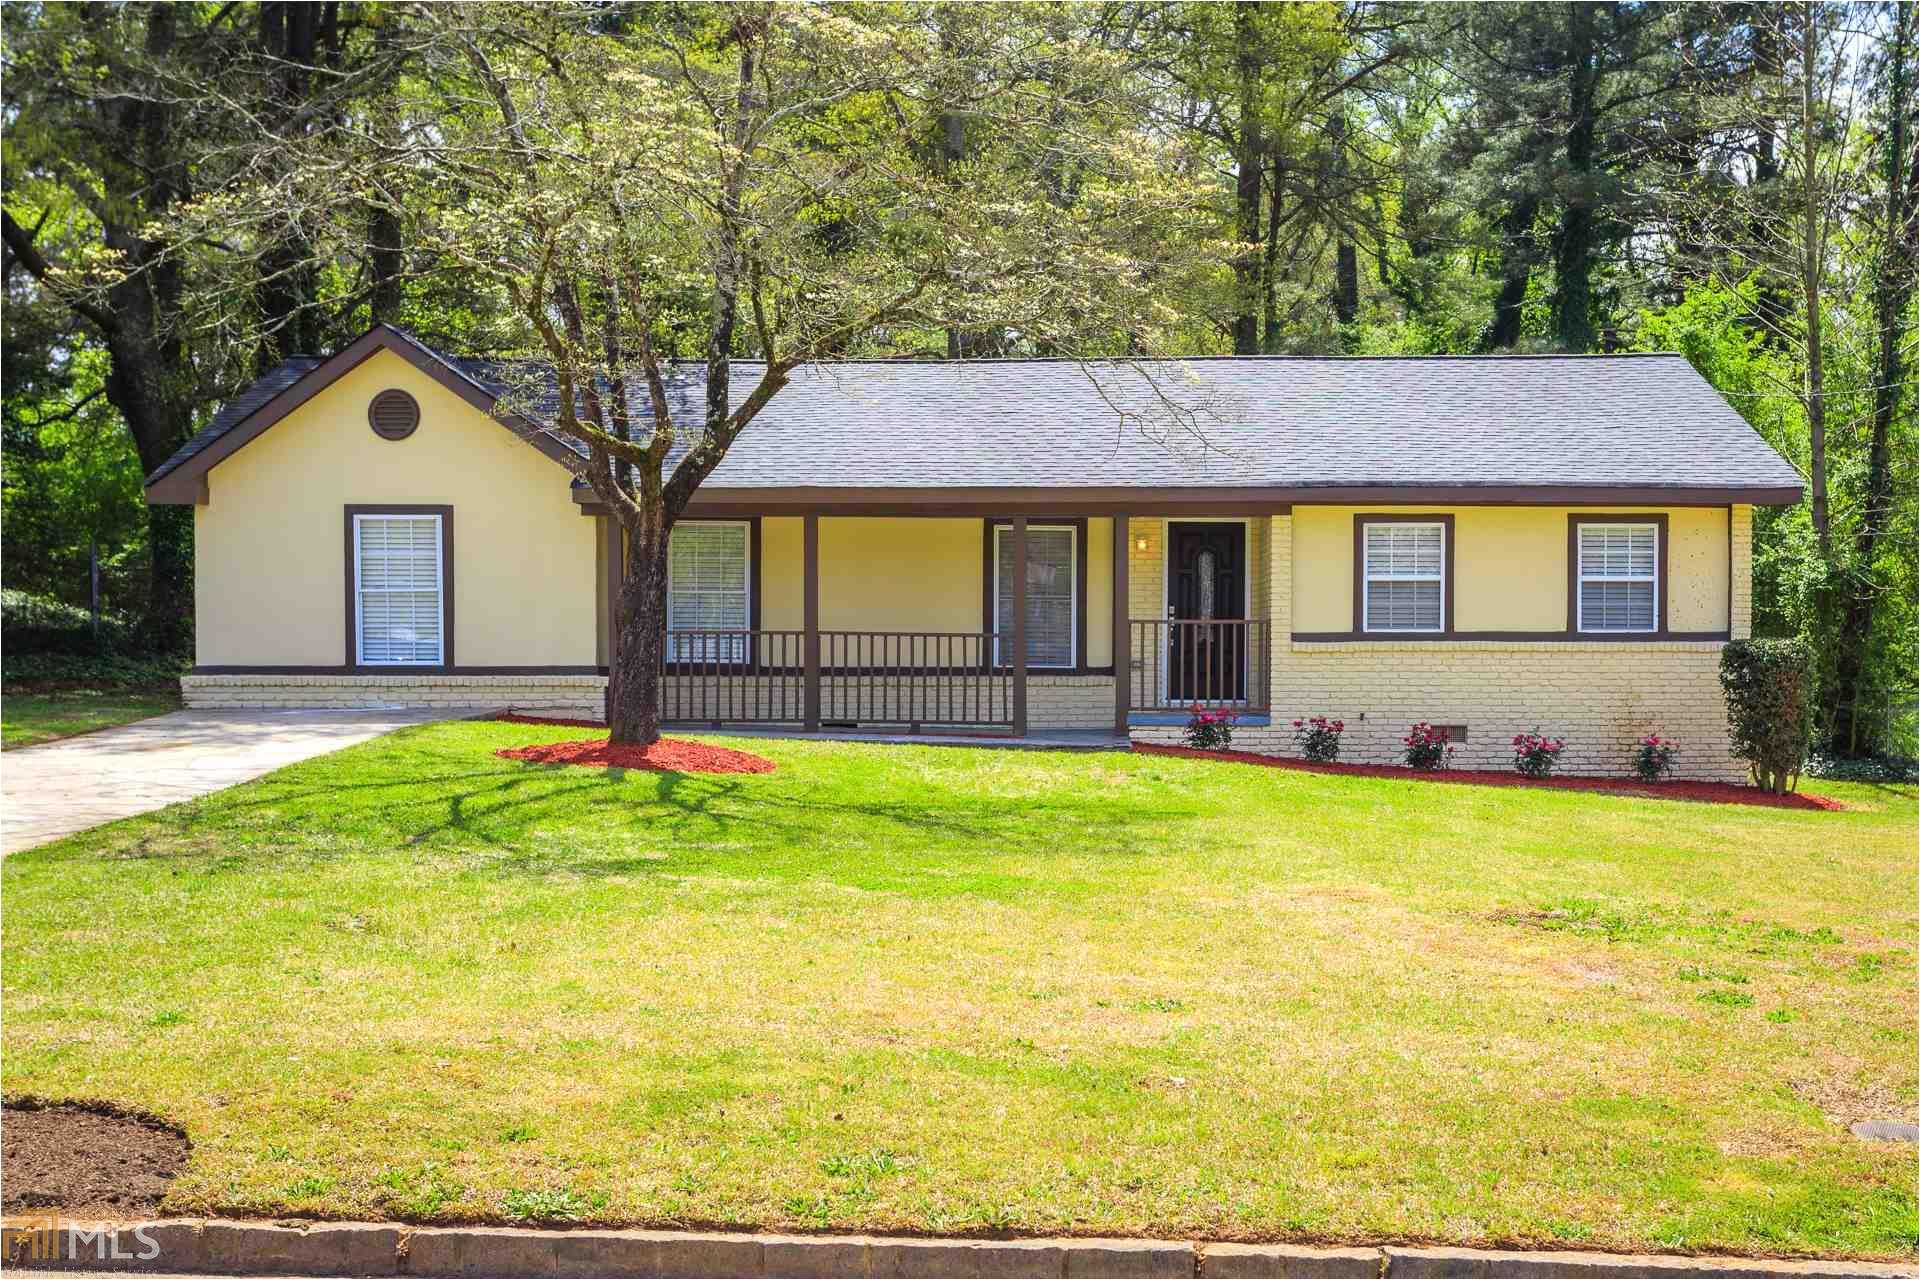 Homes for Sale In Decatur Ga 3427 Springlake Dr Decatur Ga 30032 Georgia Mls